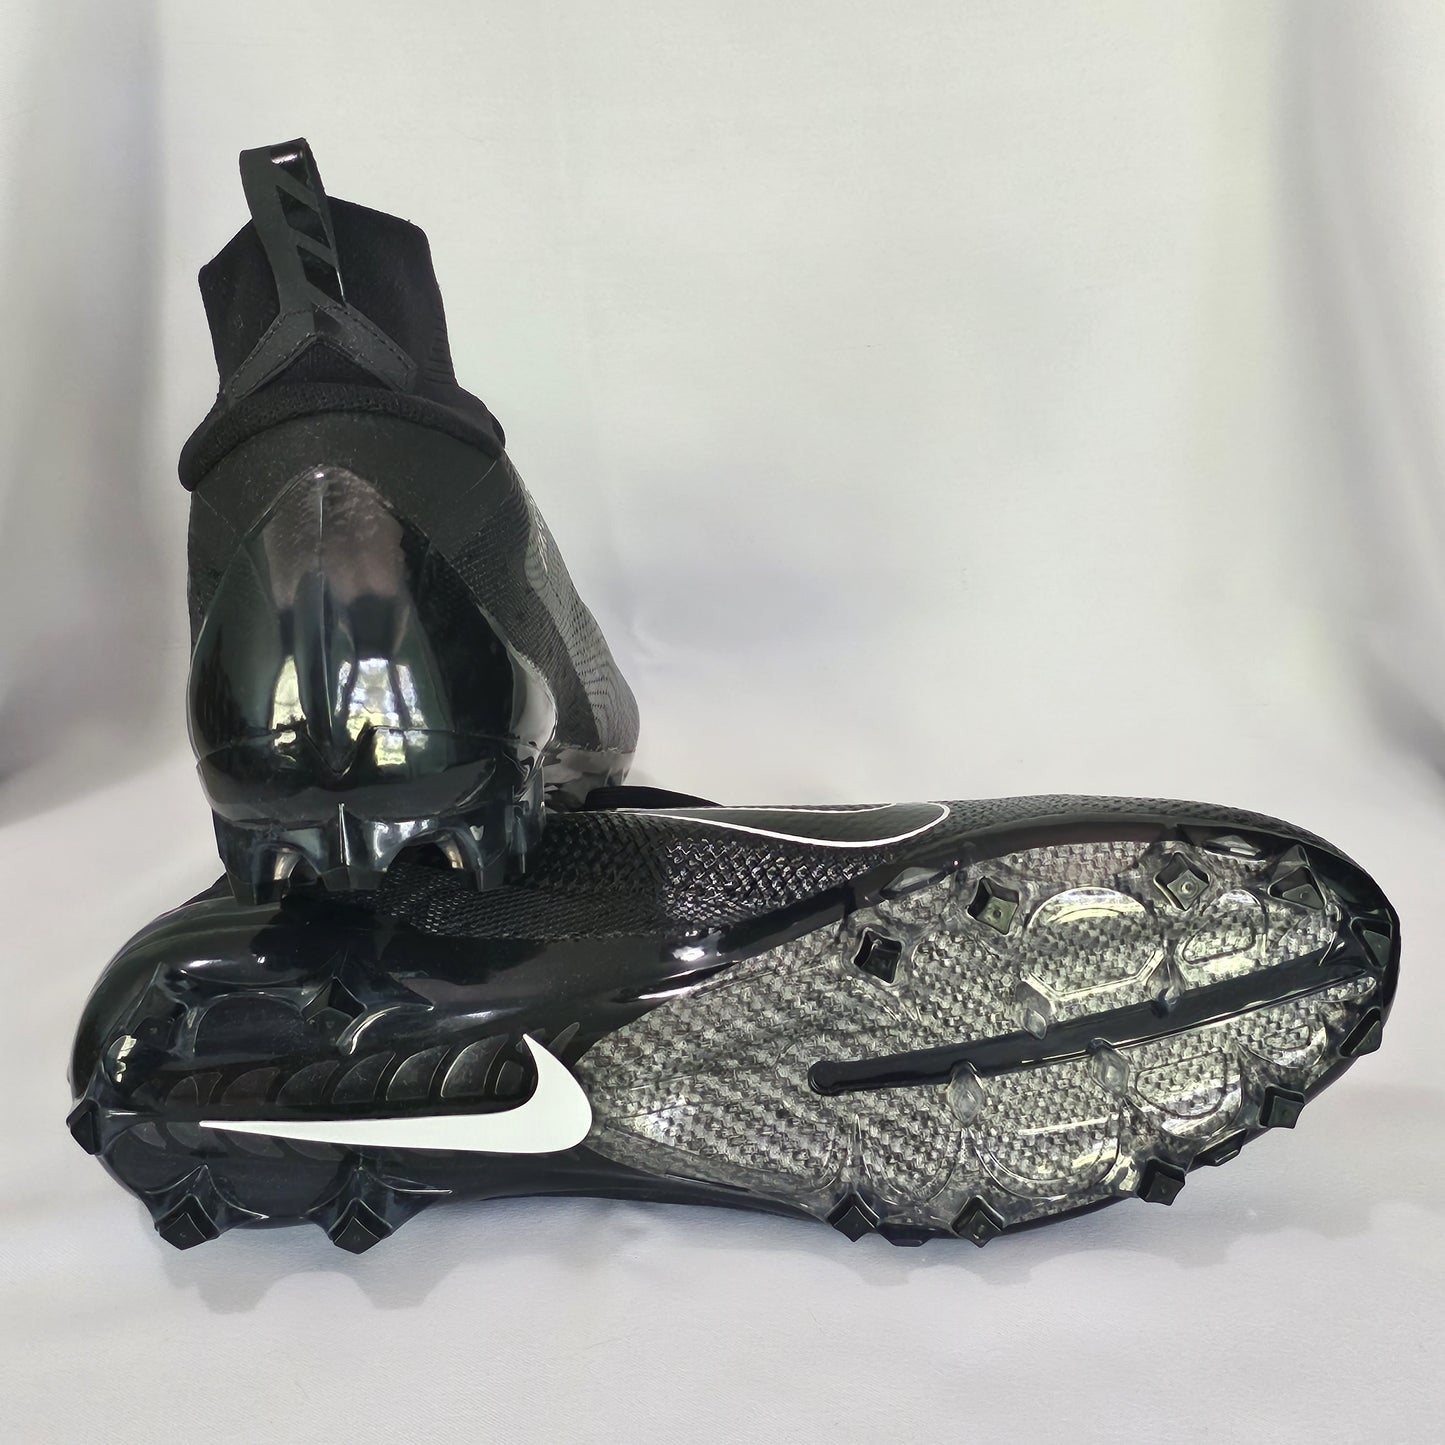 Nike Vapor Untouchable Pro 3 Mid Black Football Cleats in Box